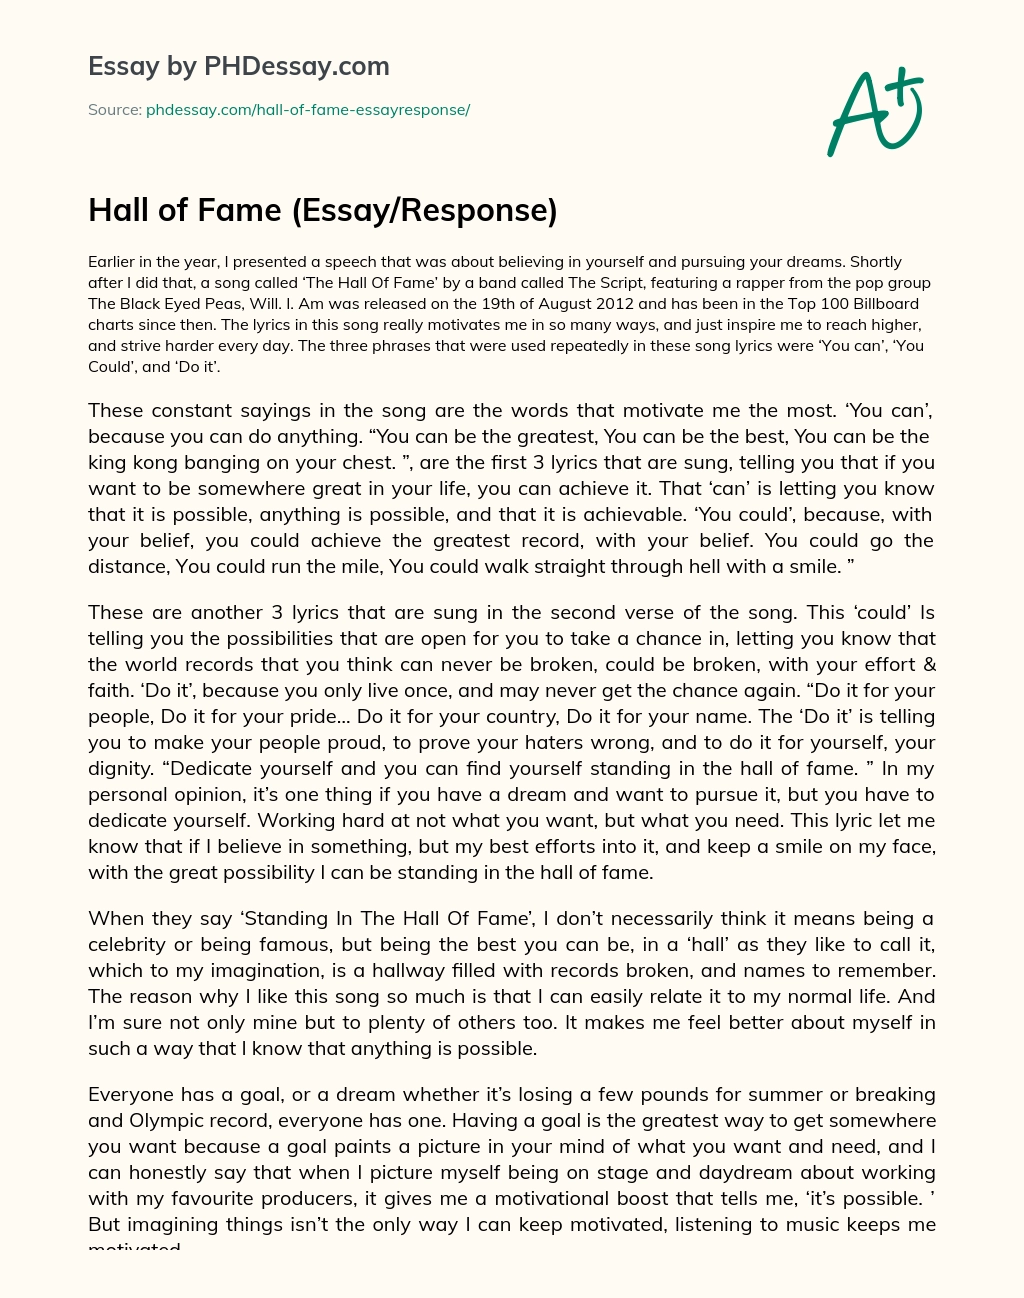 Hall of Fame (Essay/Response) essay